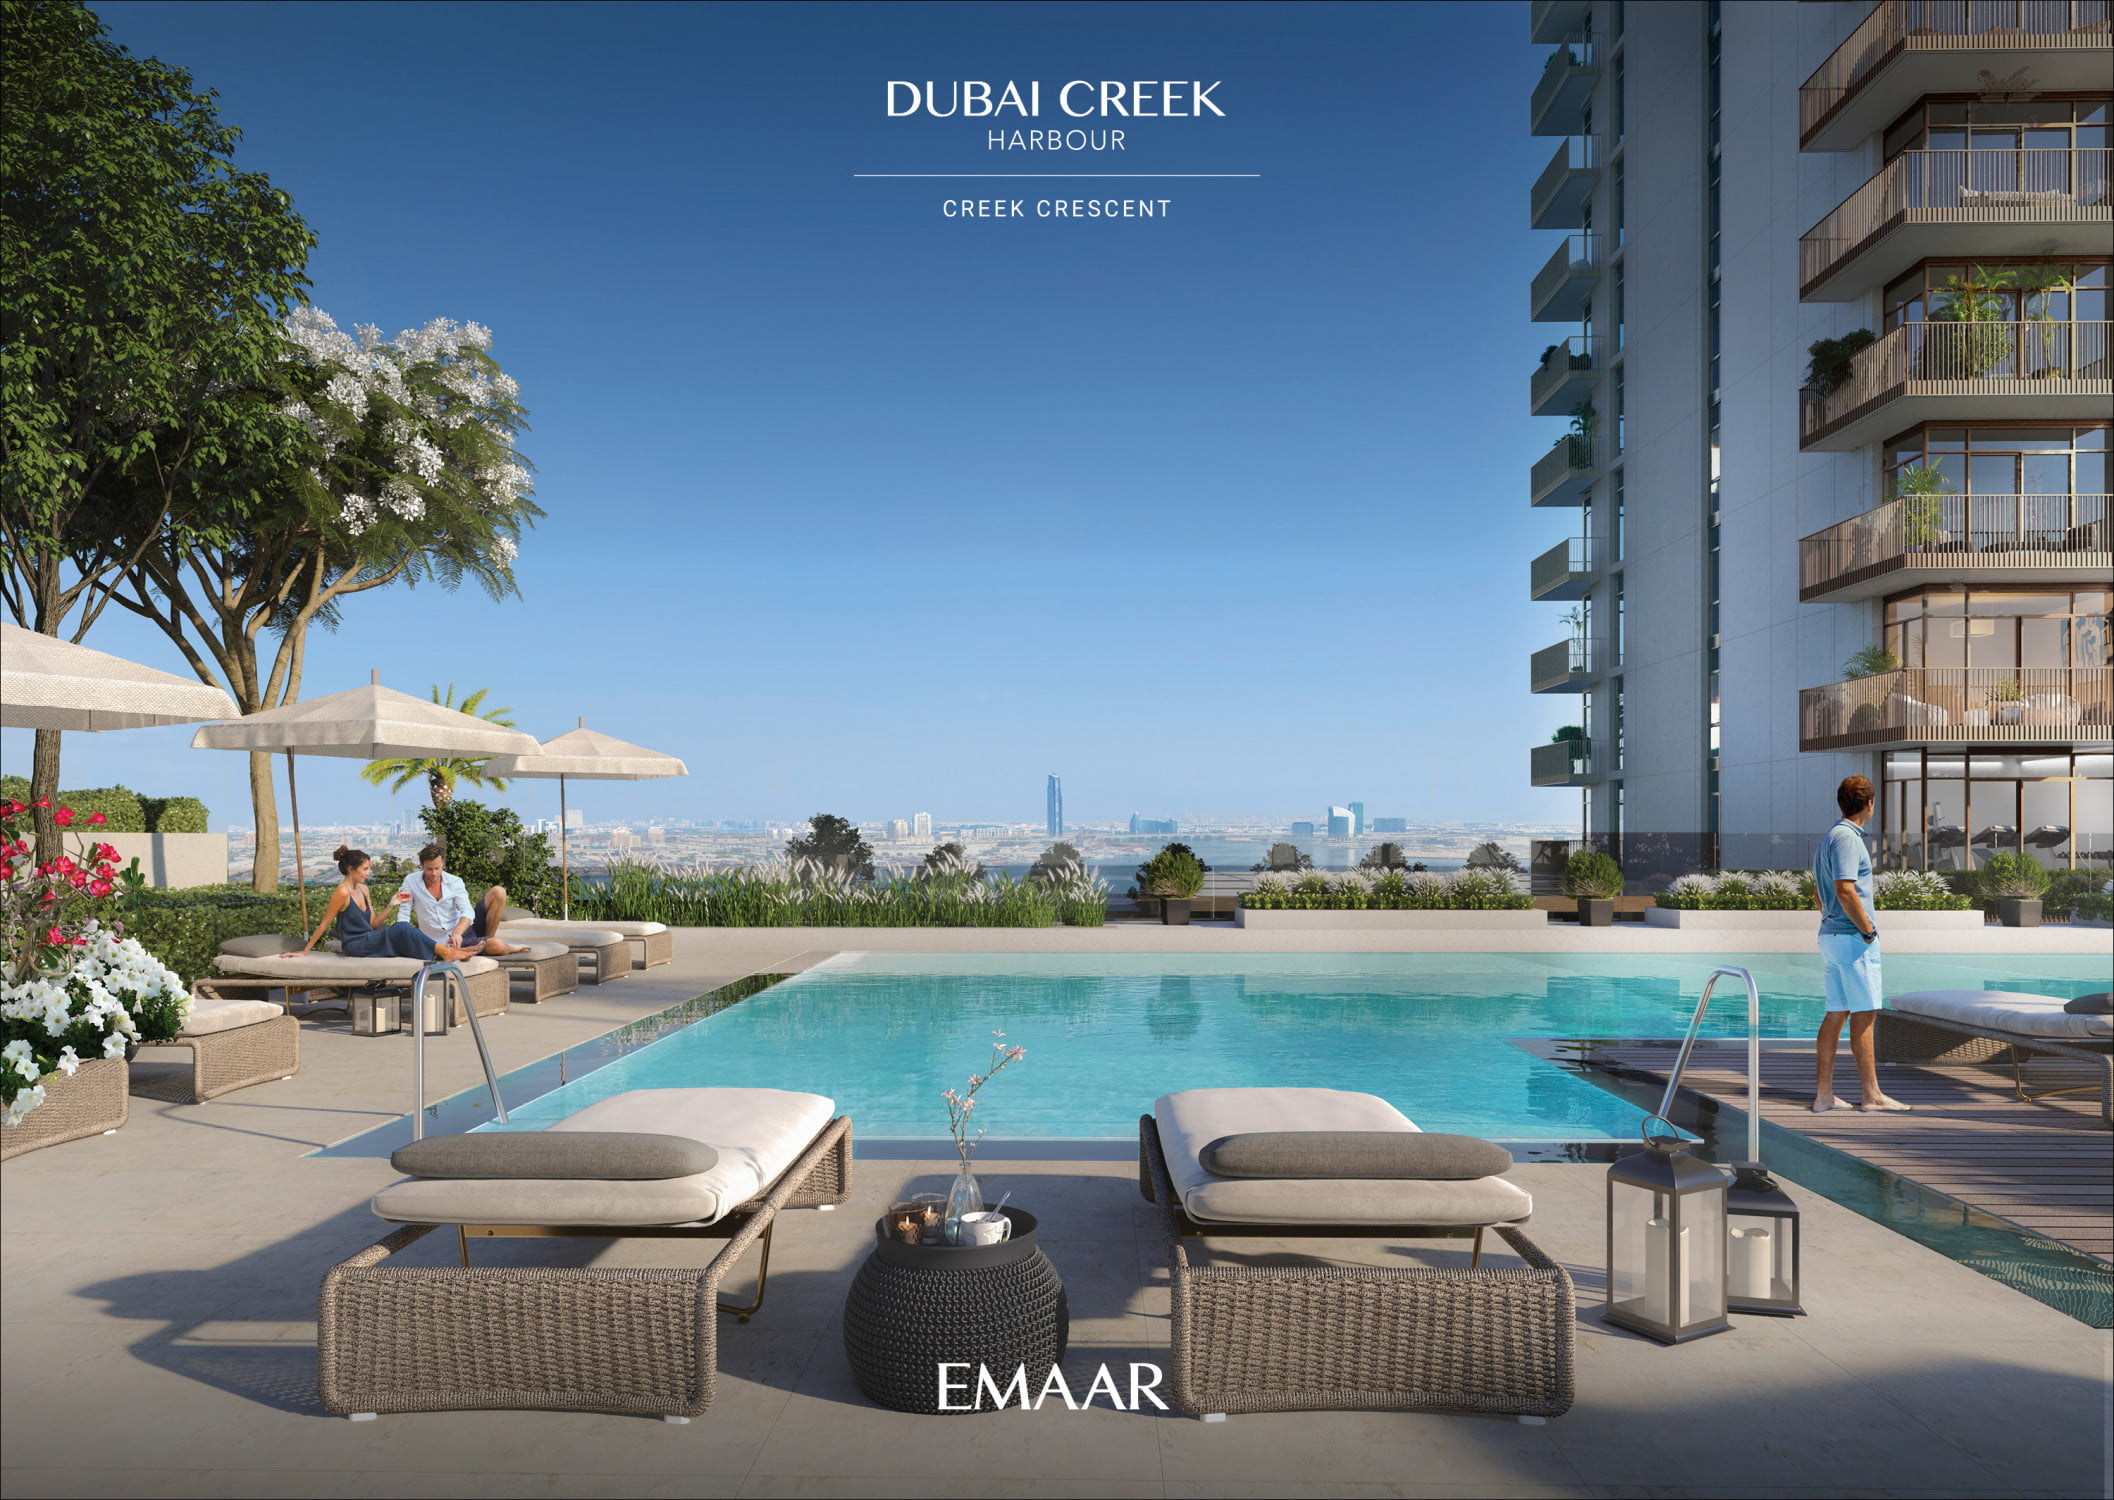 CREEK CRESCENT DUBAI CREEK HARBOUR 04 - Immobilier Dubai